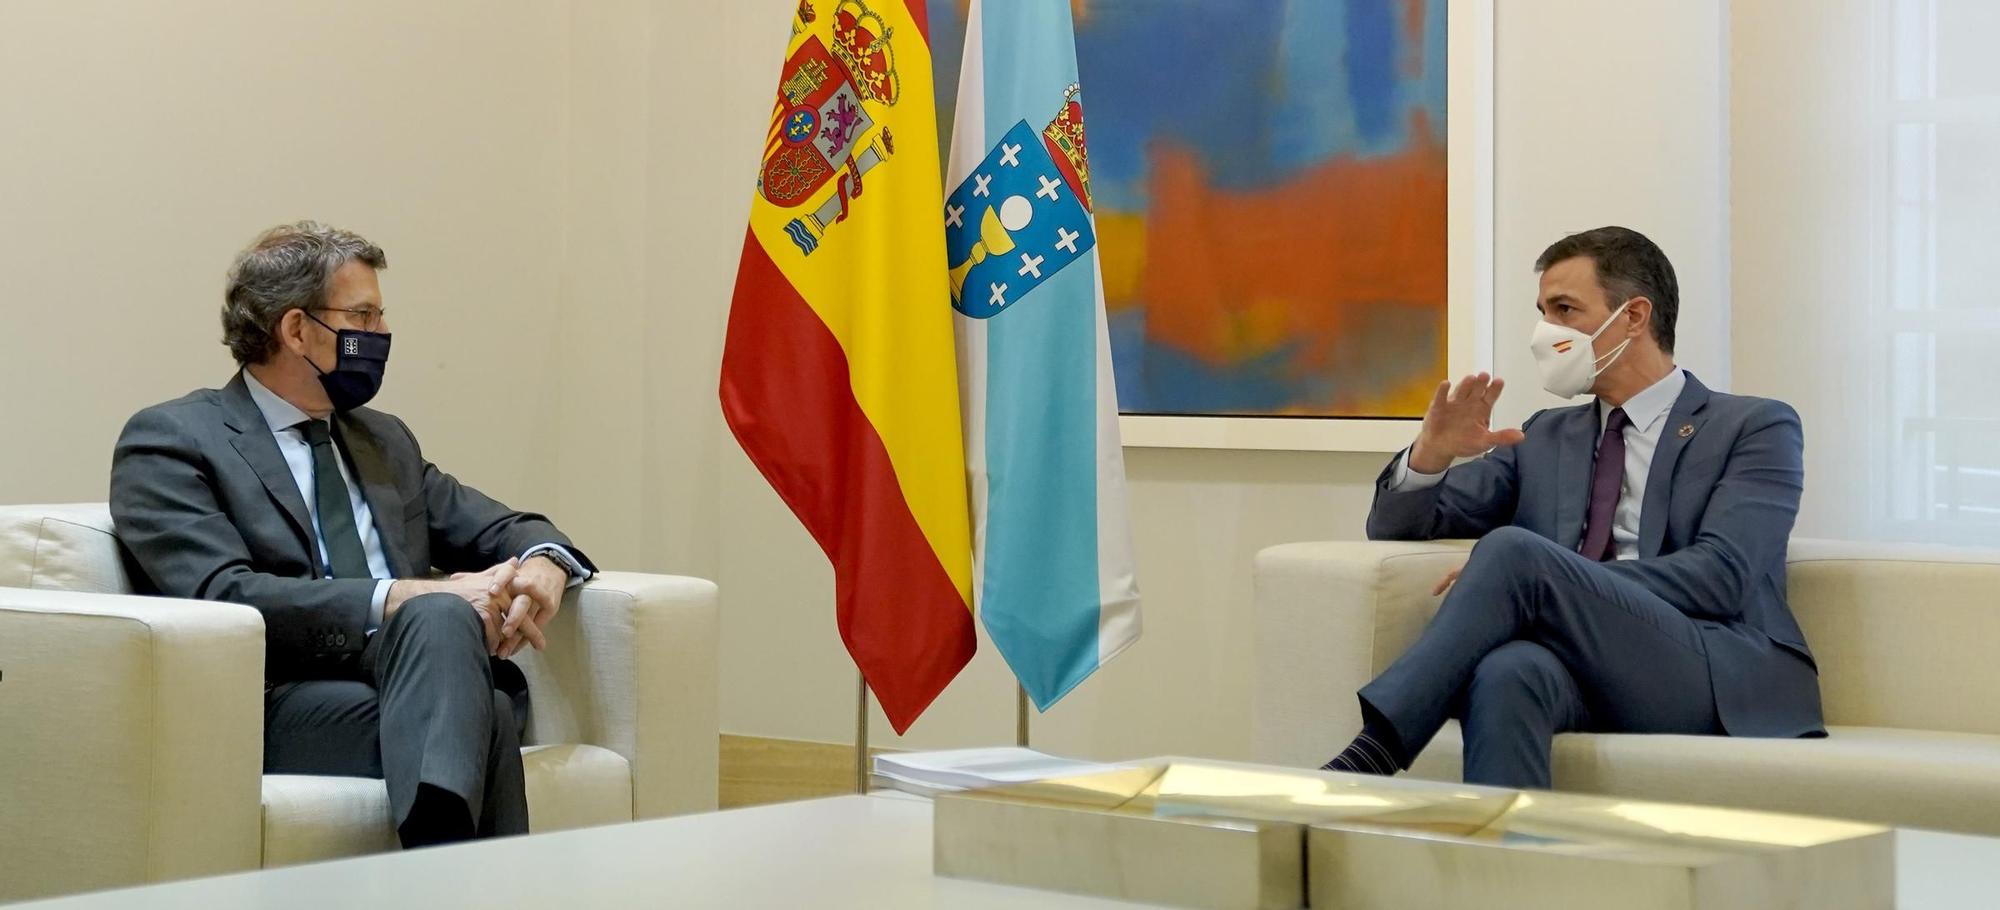 Reunión en Moncloa de Pedro Sánchez y Alberto Núñez Feijóo